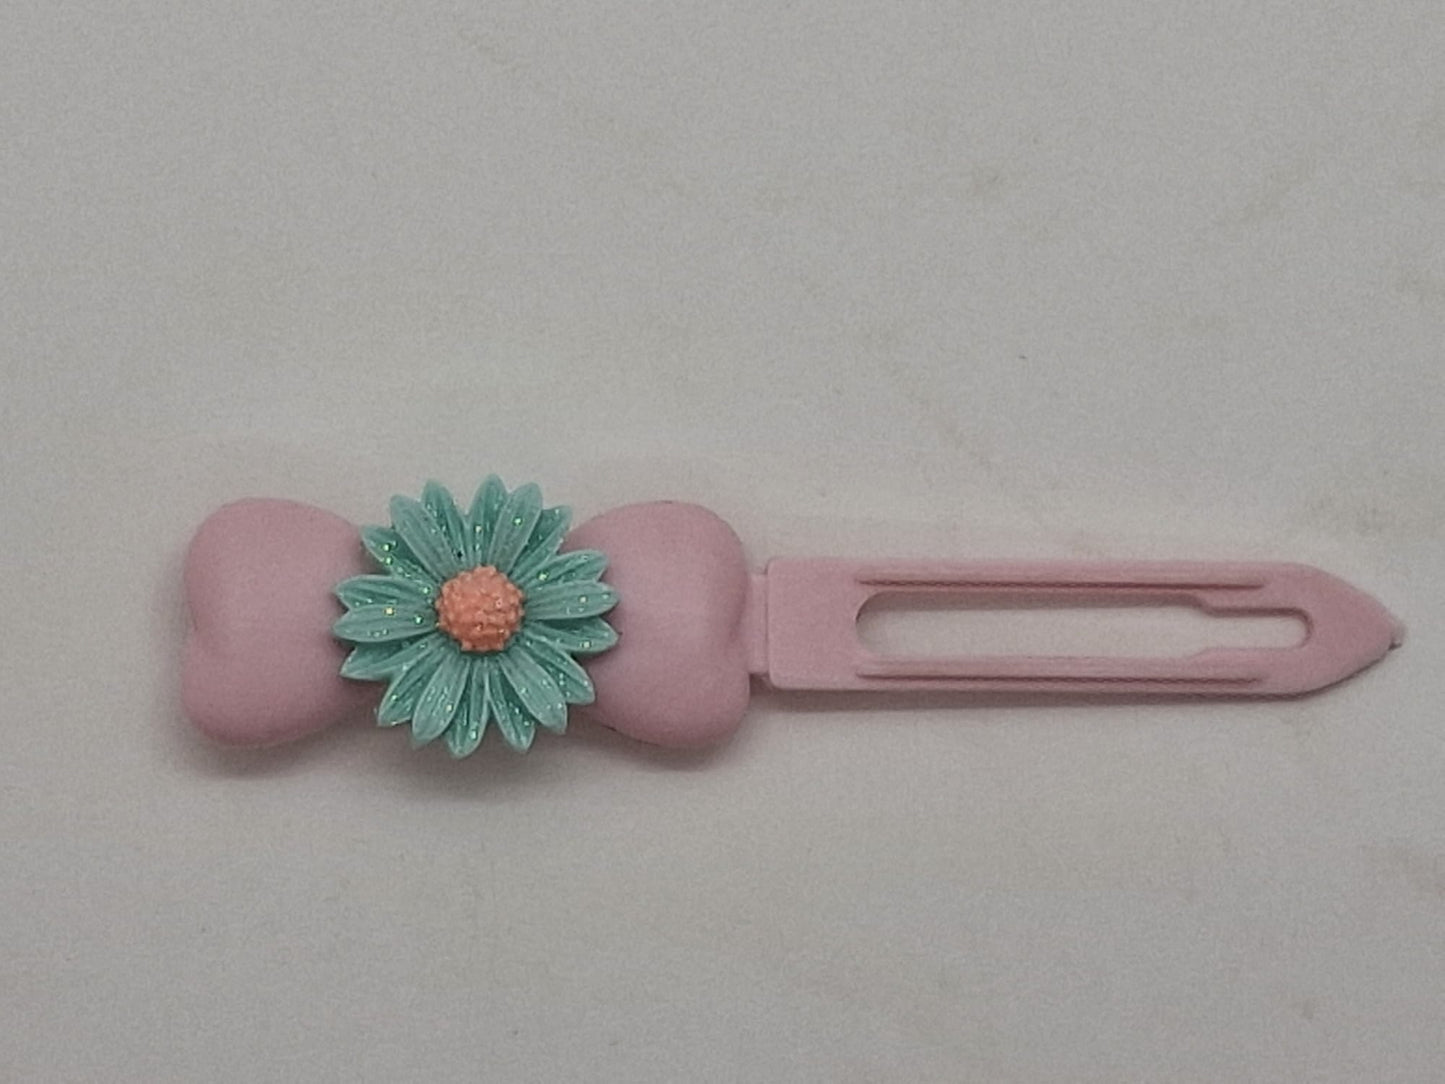 Aqua Glitzer-Gänseblümchen-Haarspange, 4,5 cm, neuartiger Clip